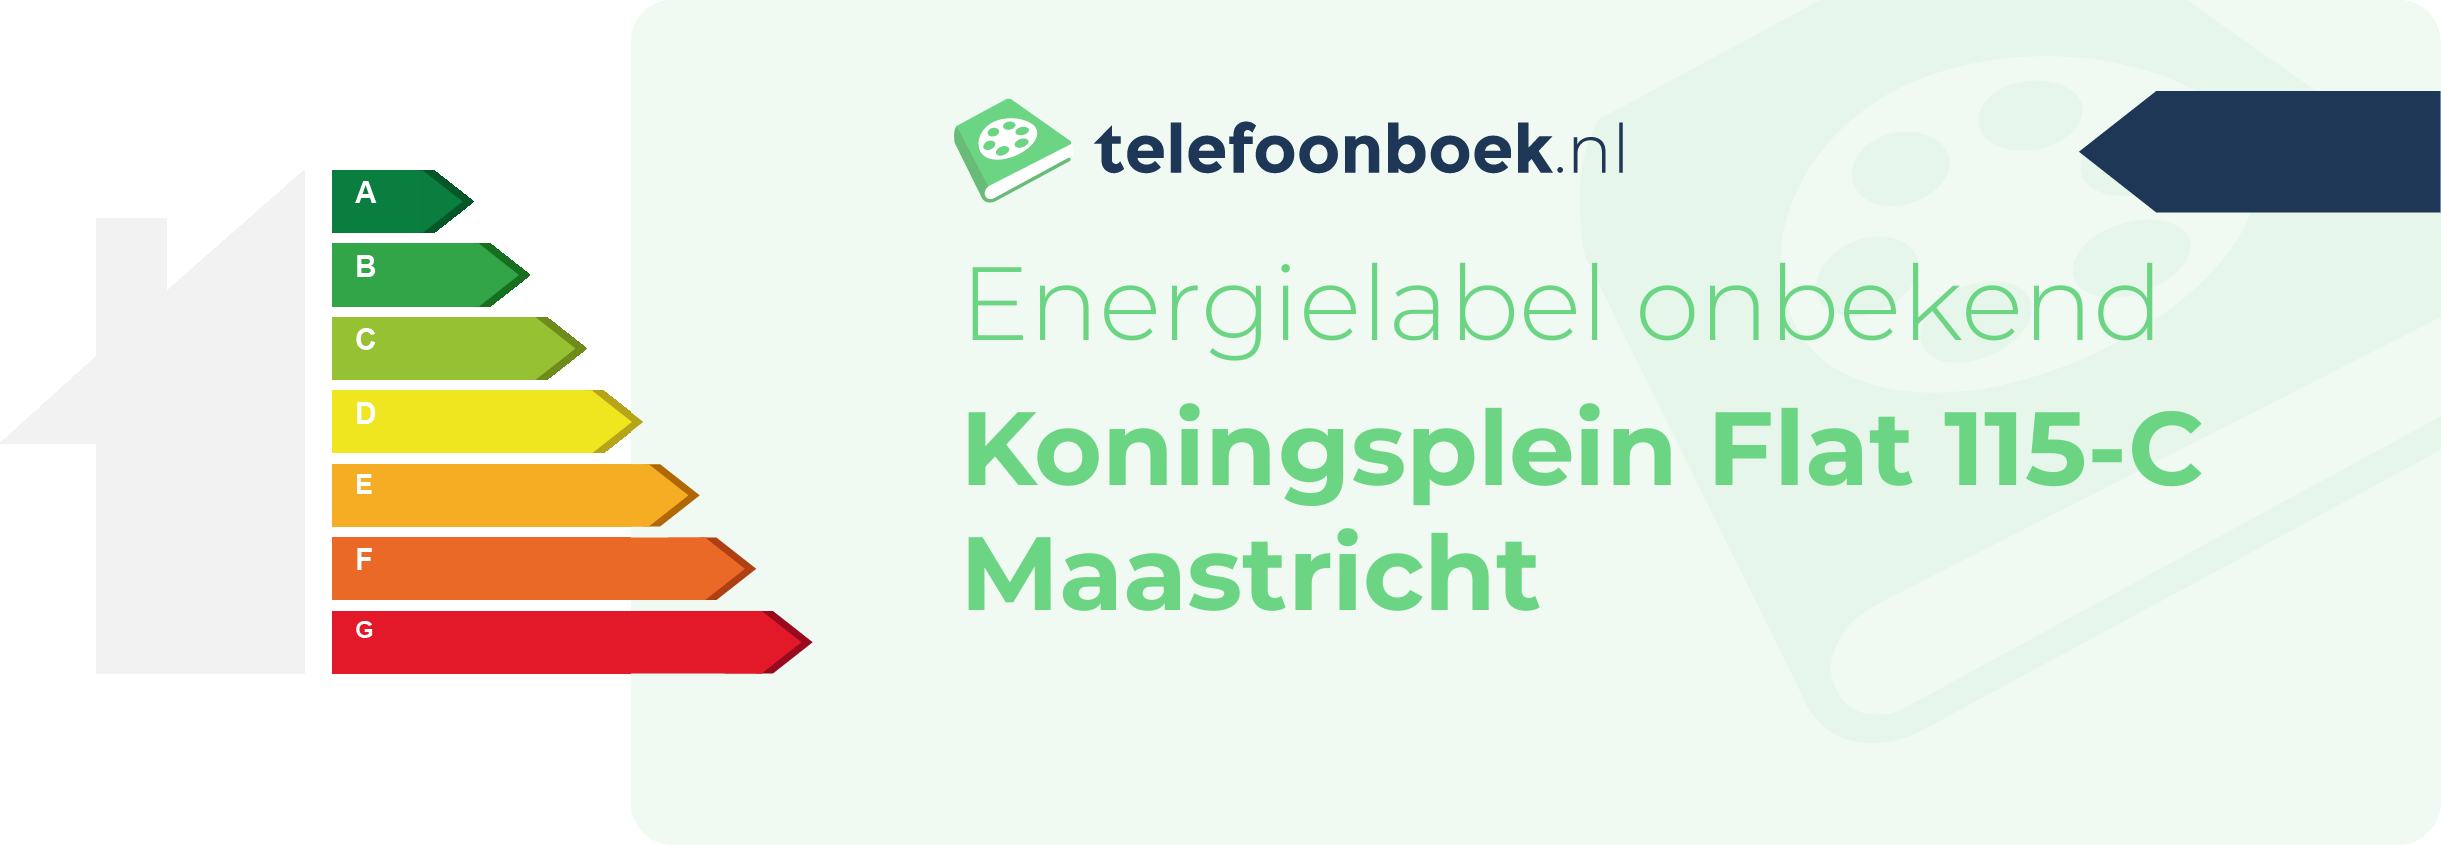 Energielabel Koningsplein Flat 115-C Maastricht